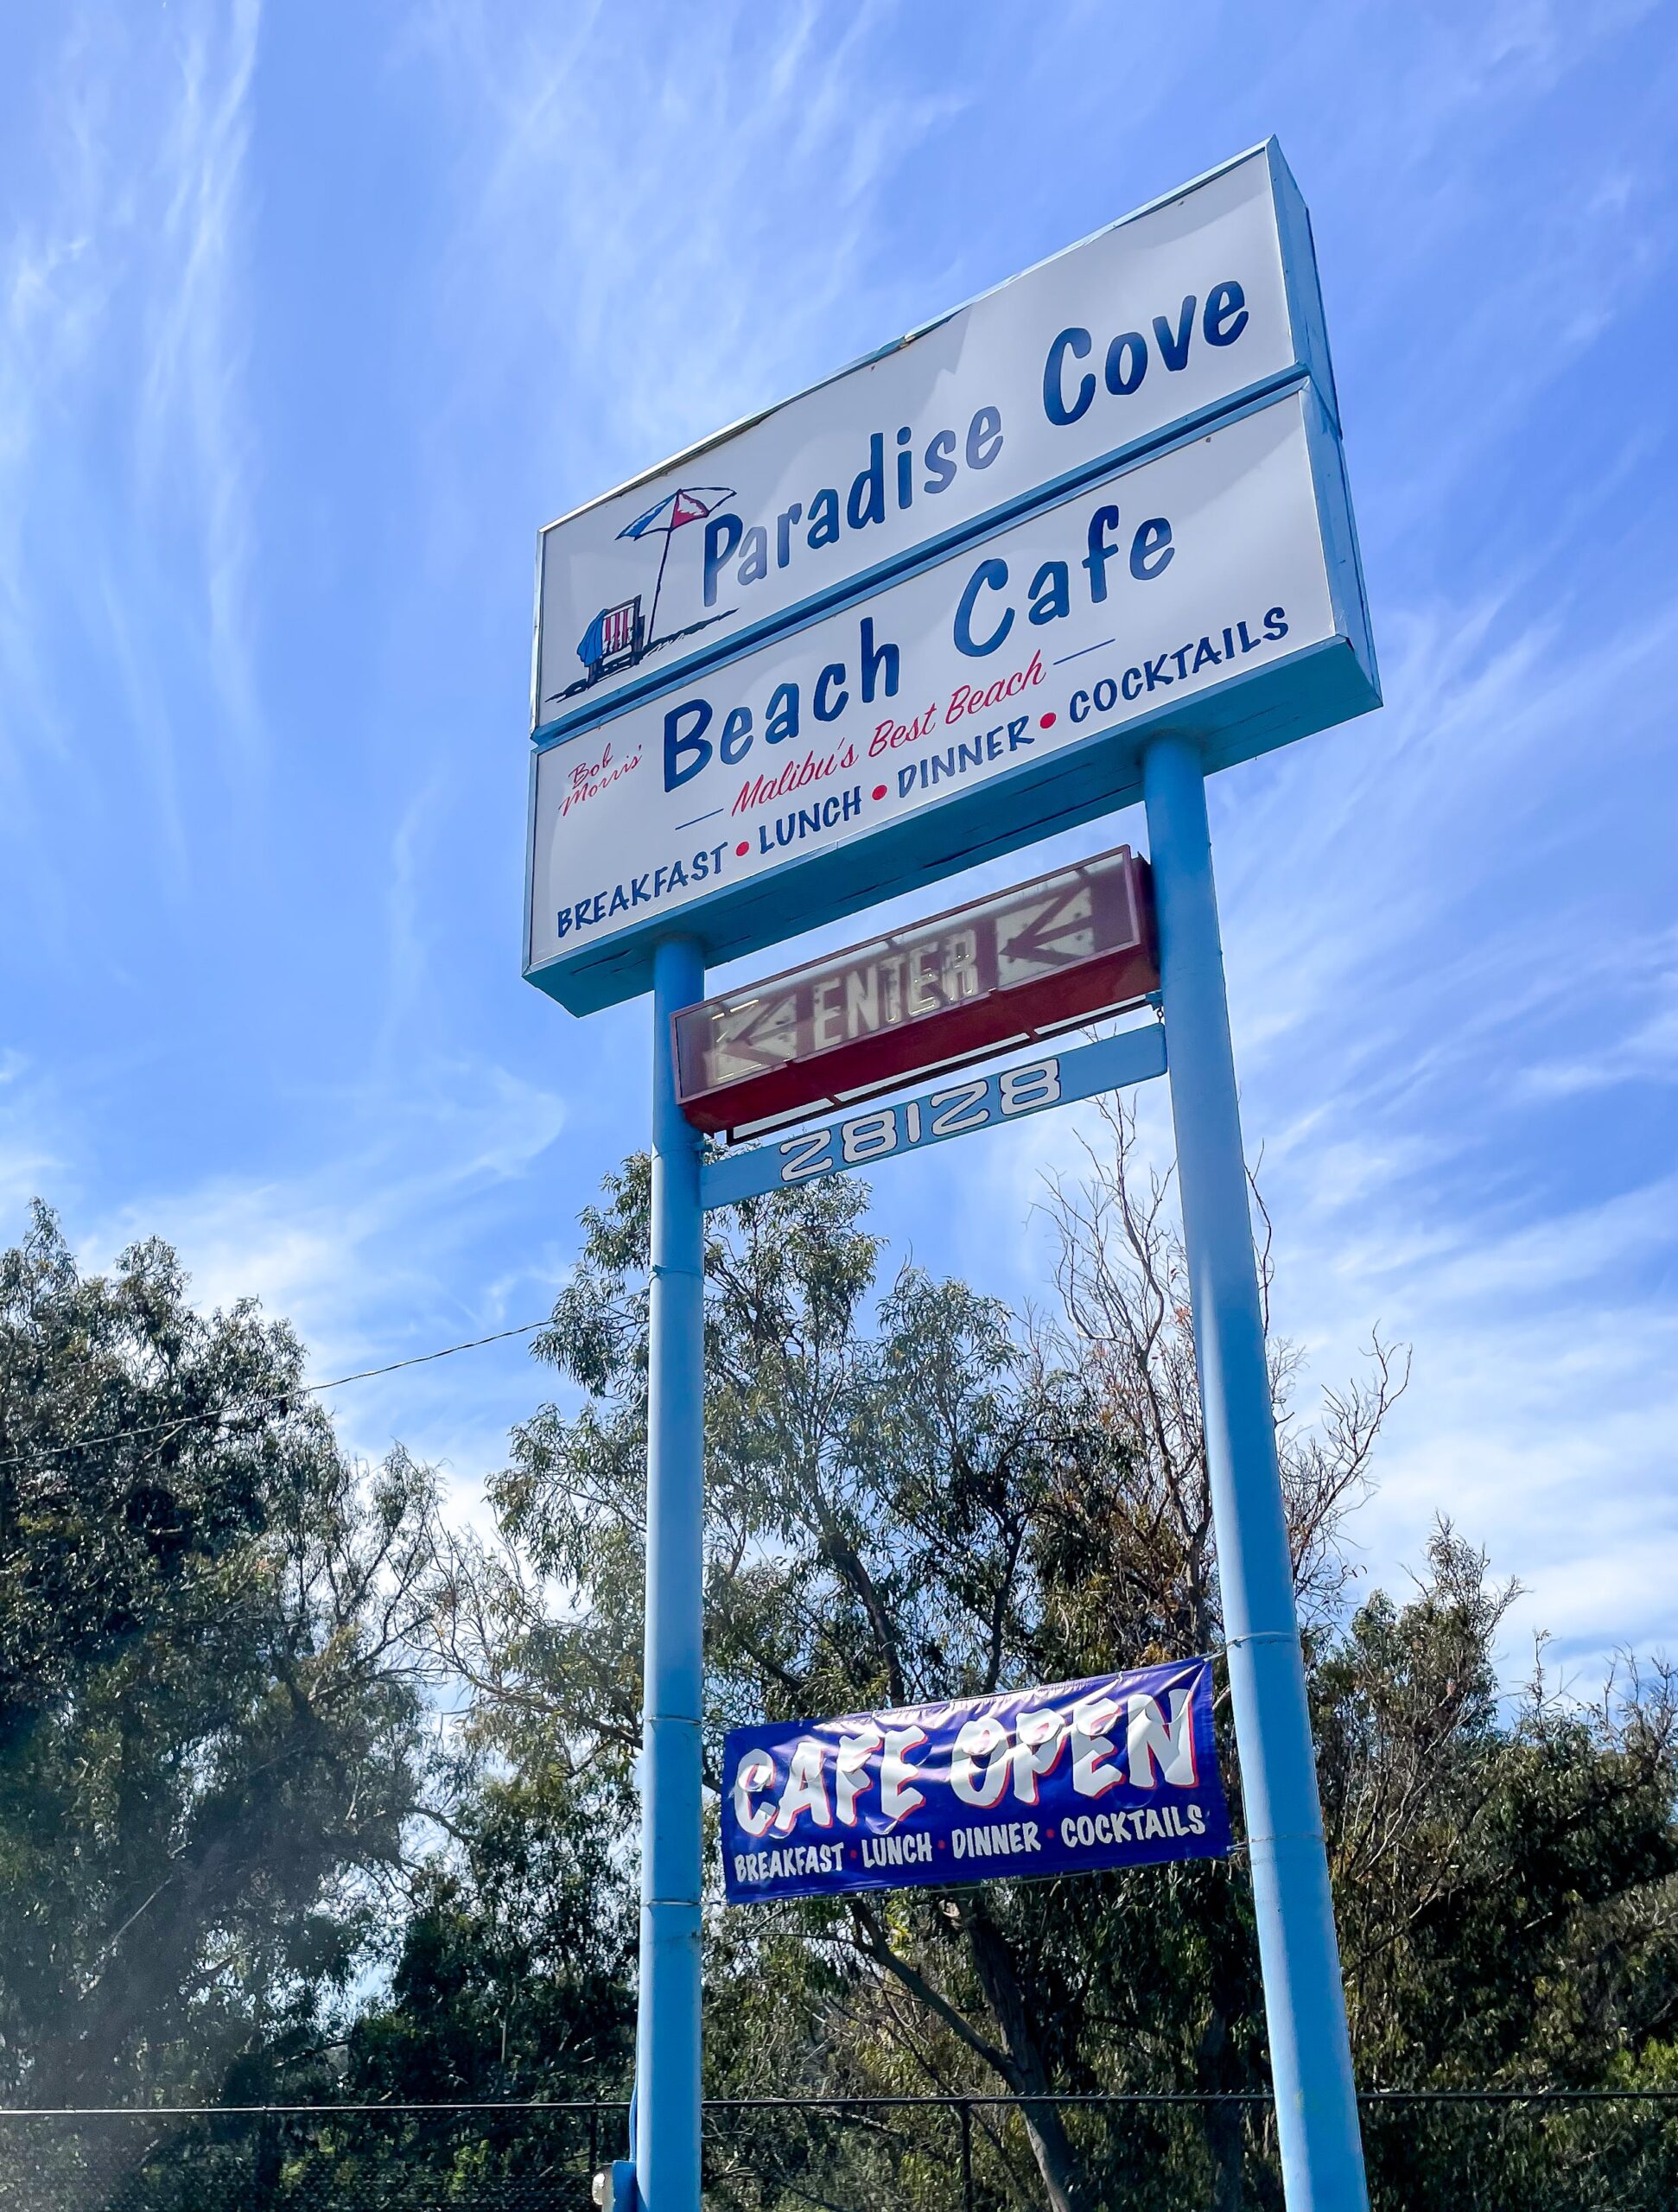 Paradise cove beach cafe sign